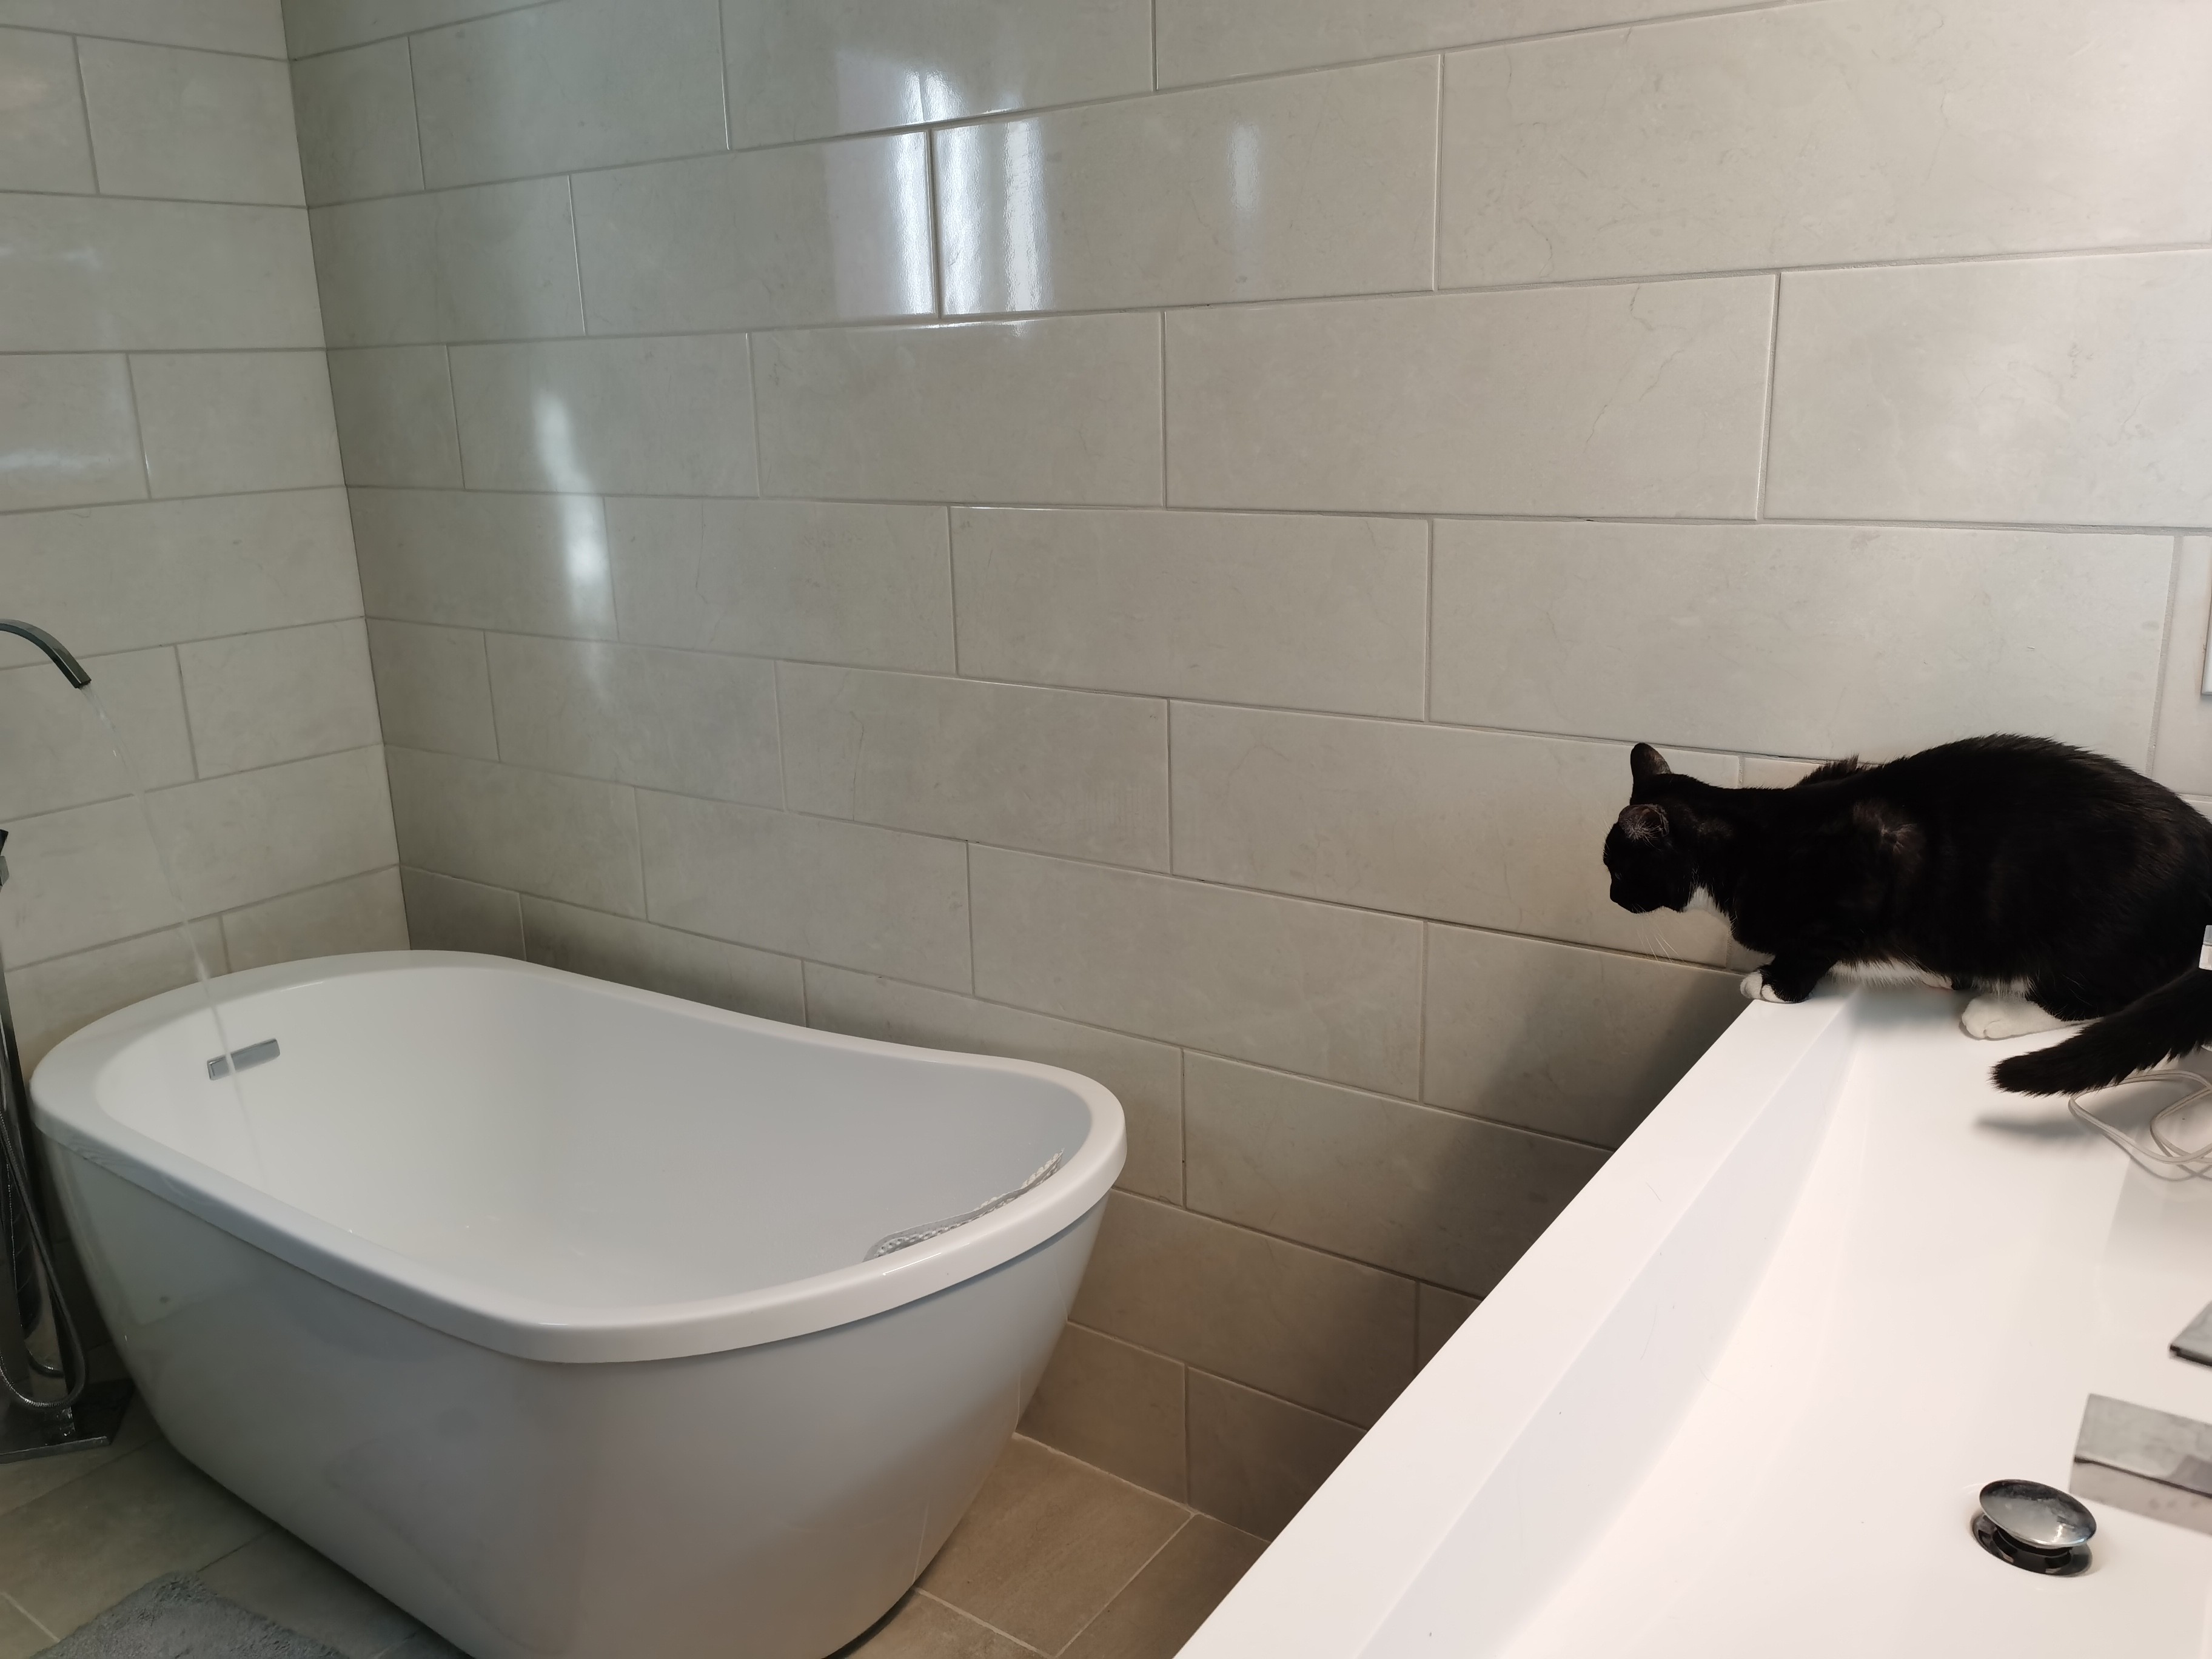 Kitten staring at bath filling itself